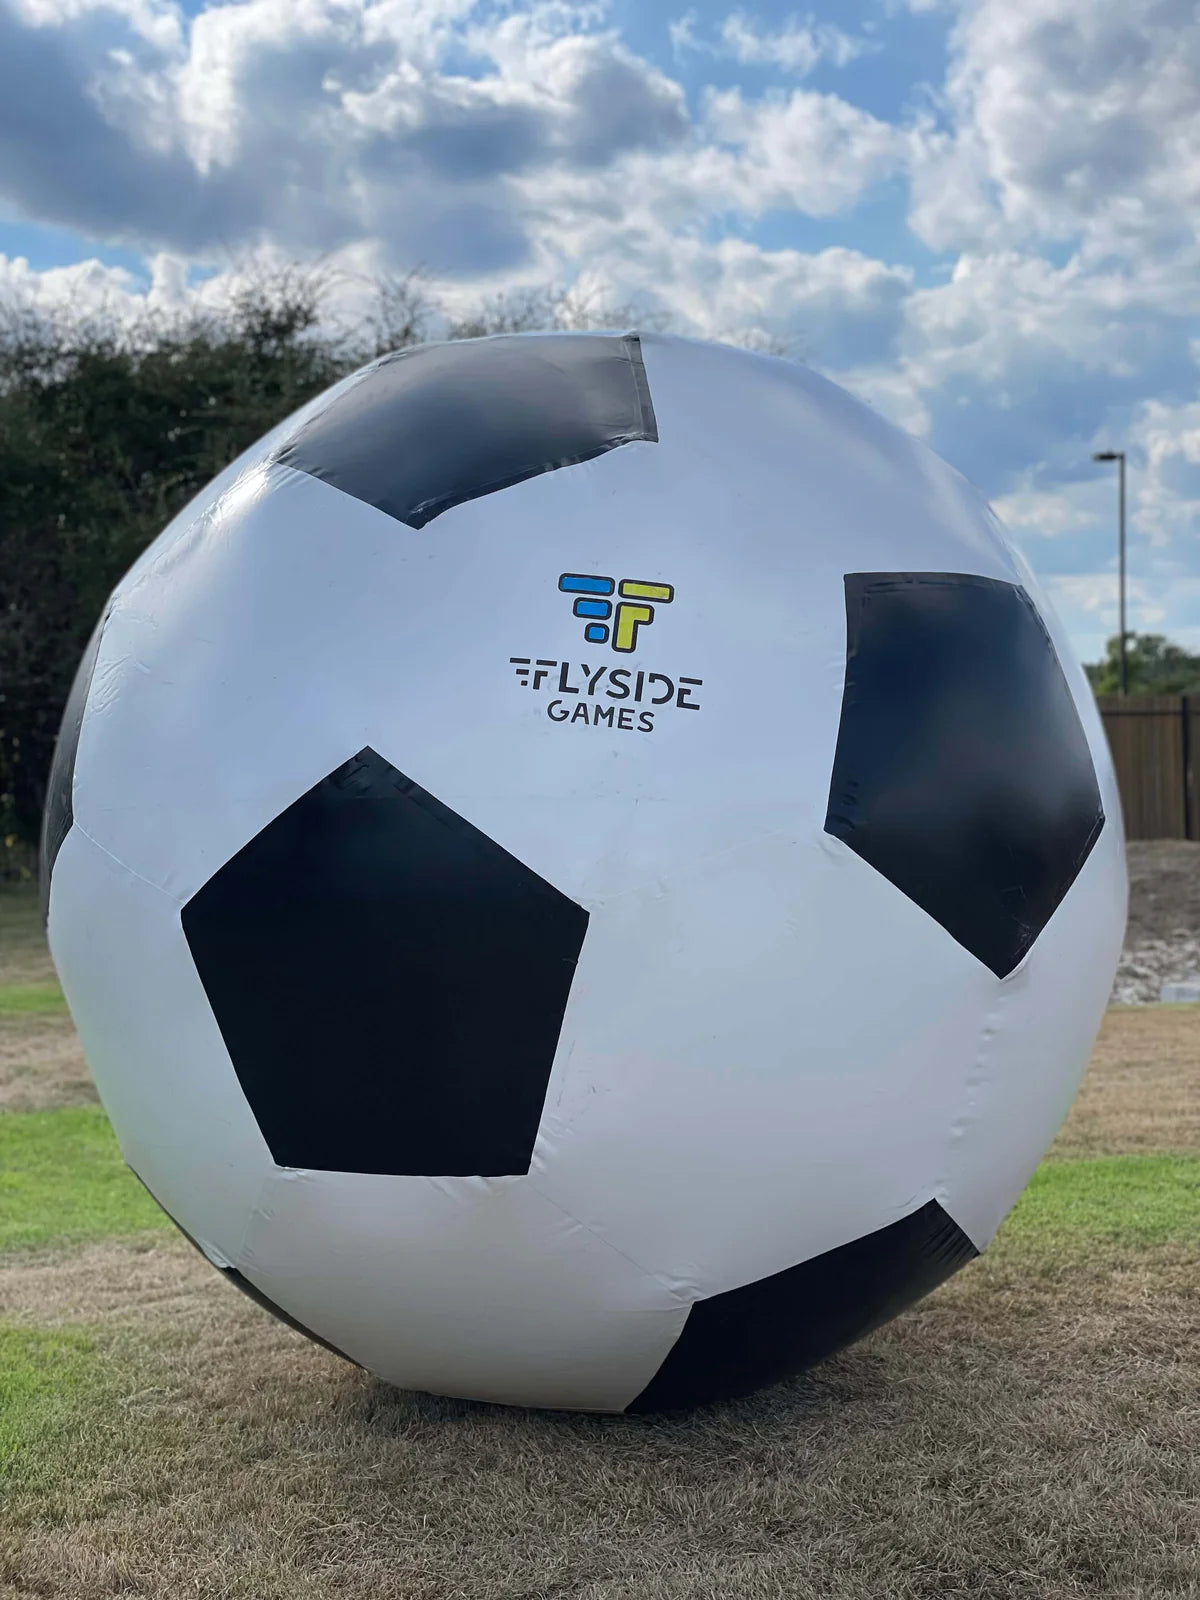 San Marcos Giant Soccer Ball Rental